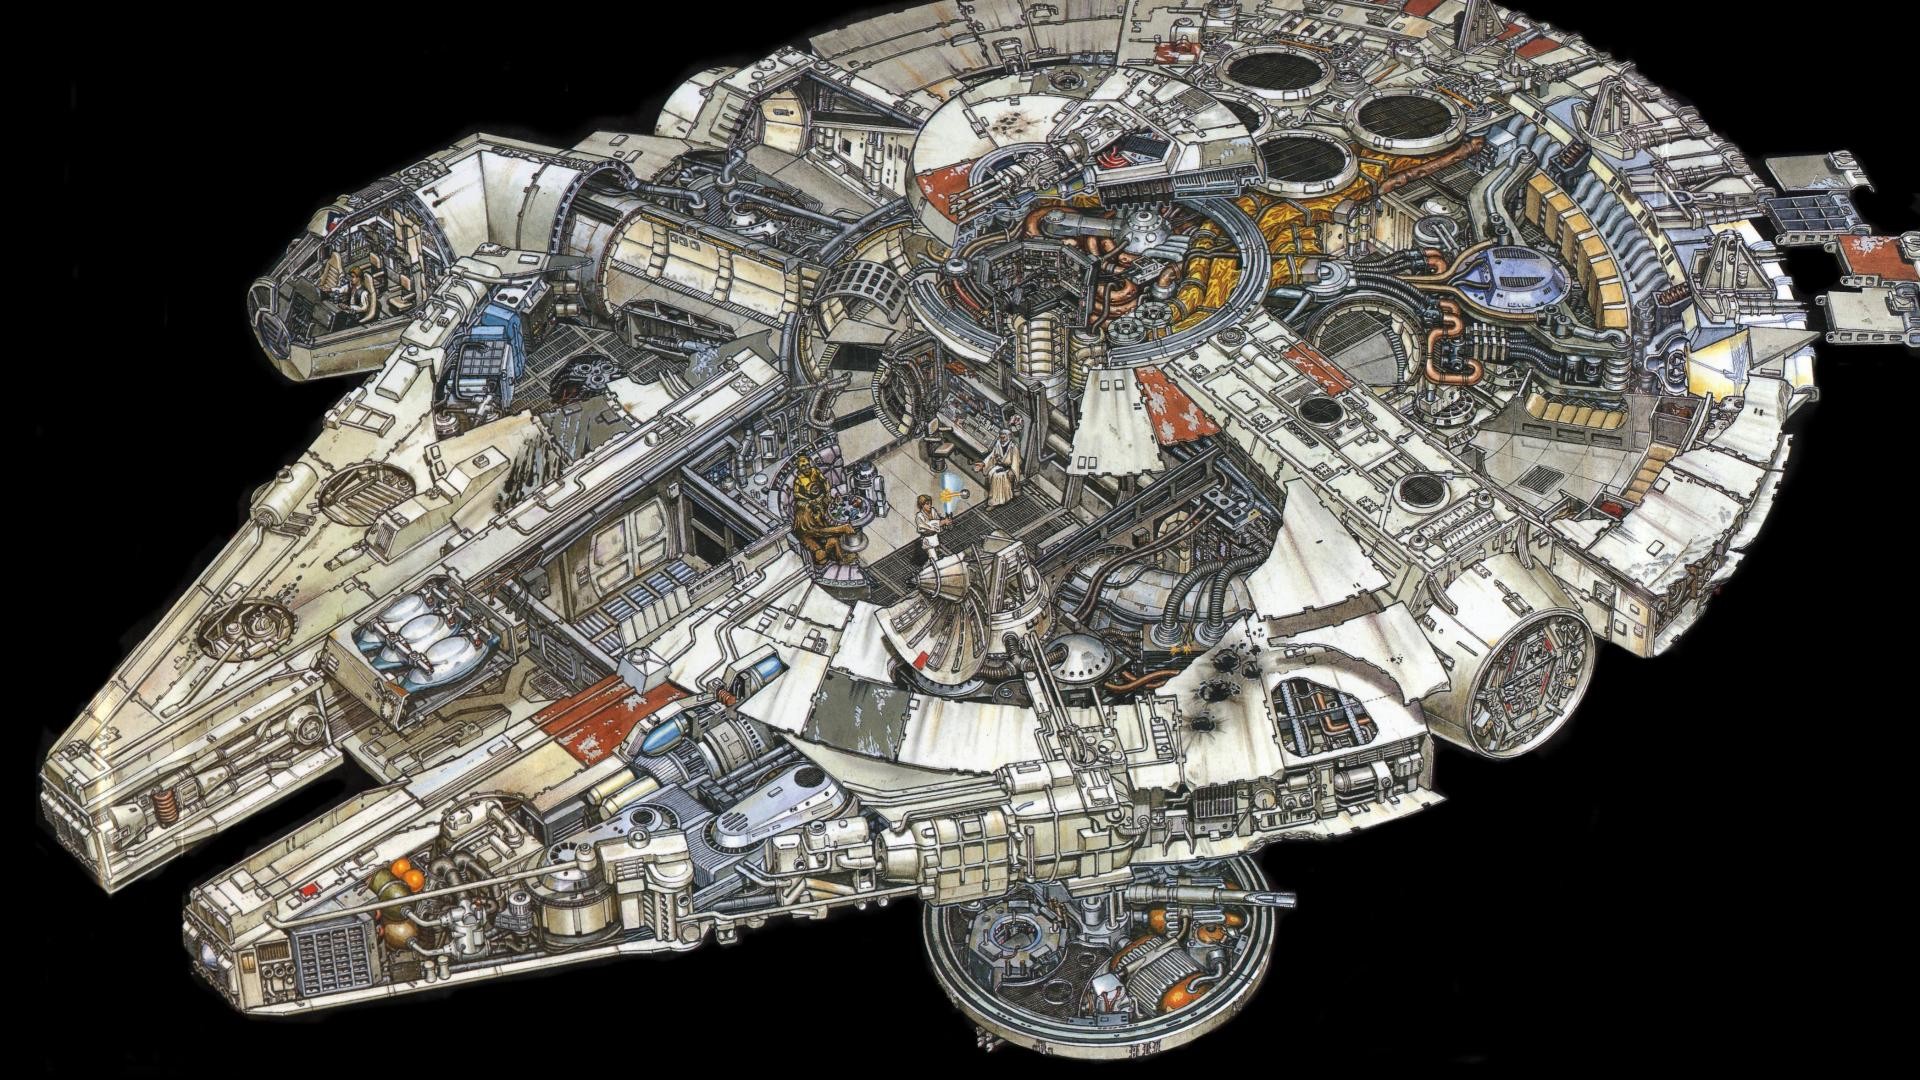 Star wars movies spaceships millenium falcon hd wallpaper .